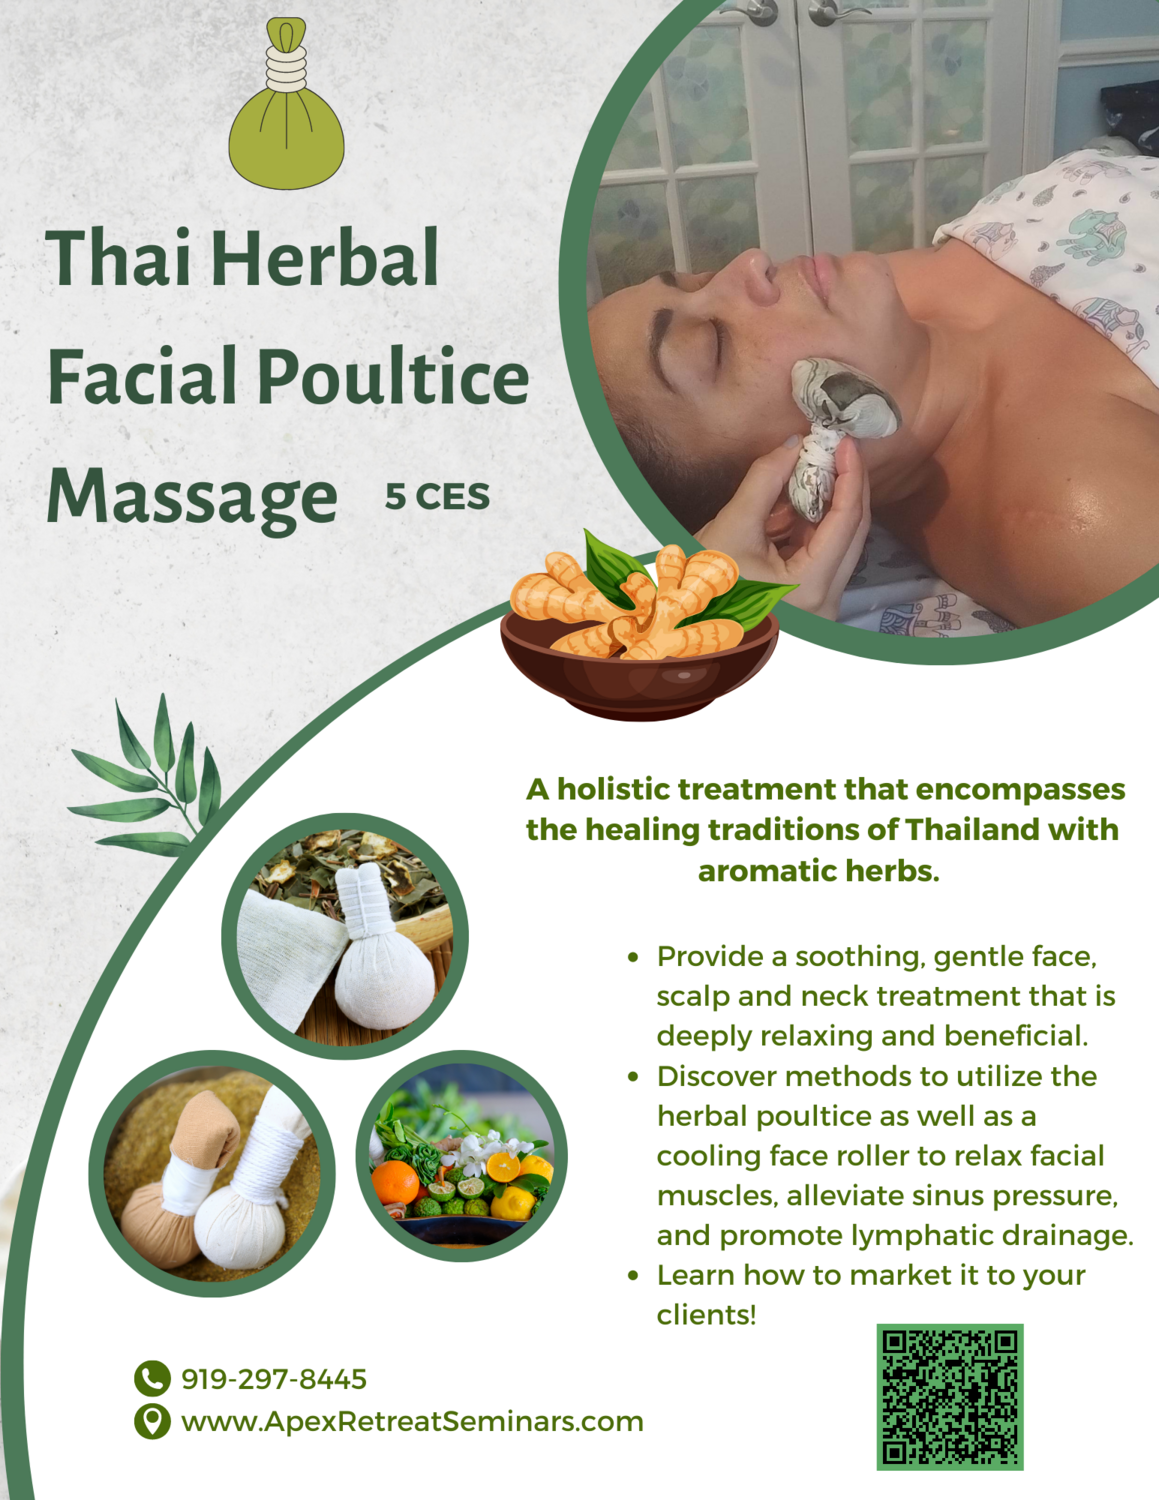 Thai Herbal Poultice Facial Massage